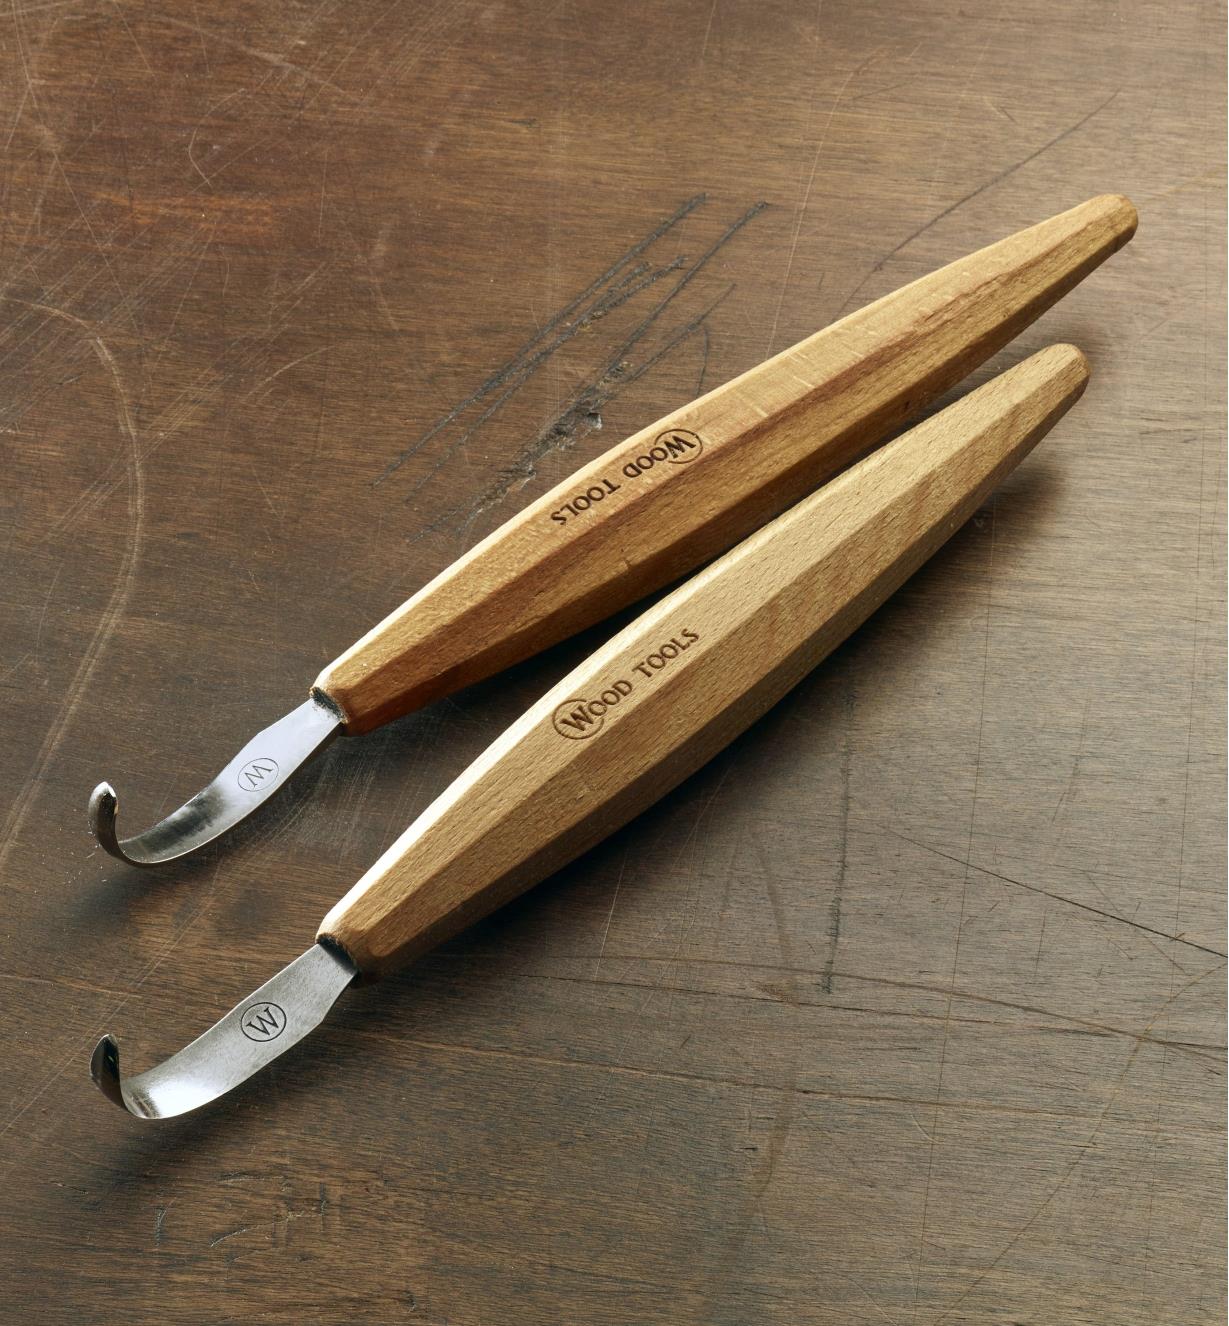 Compound-Curve Spoon Knife